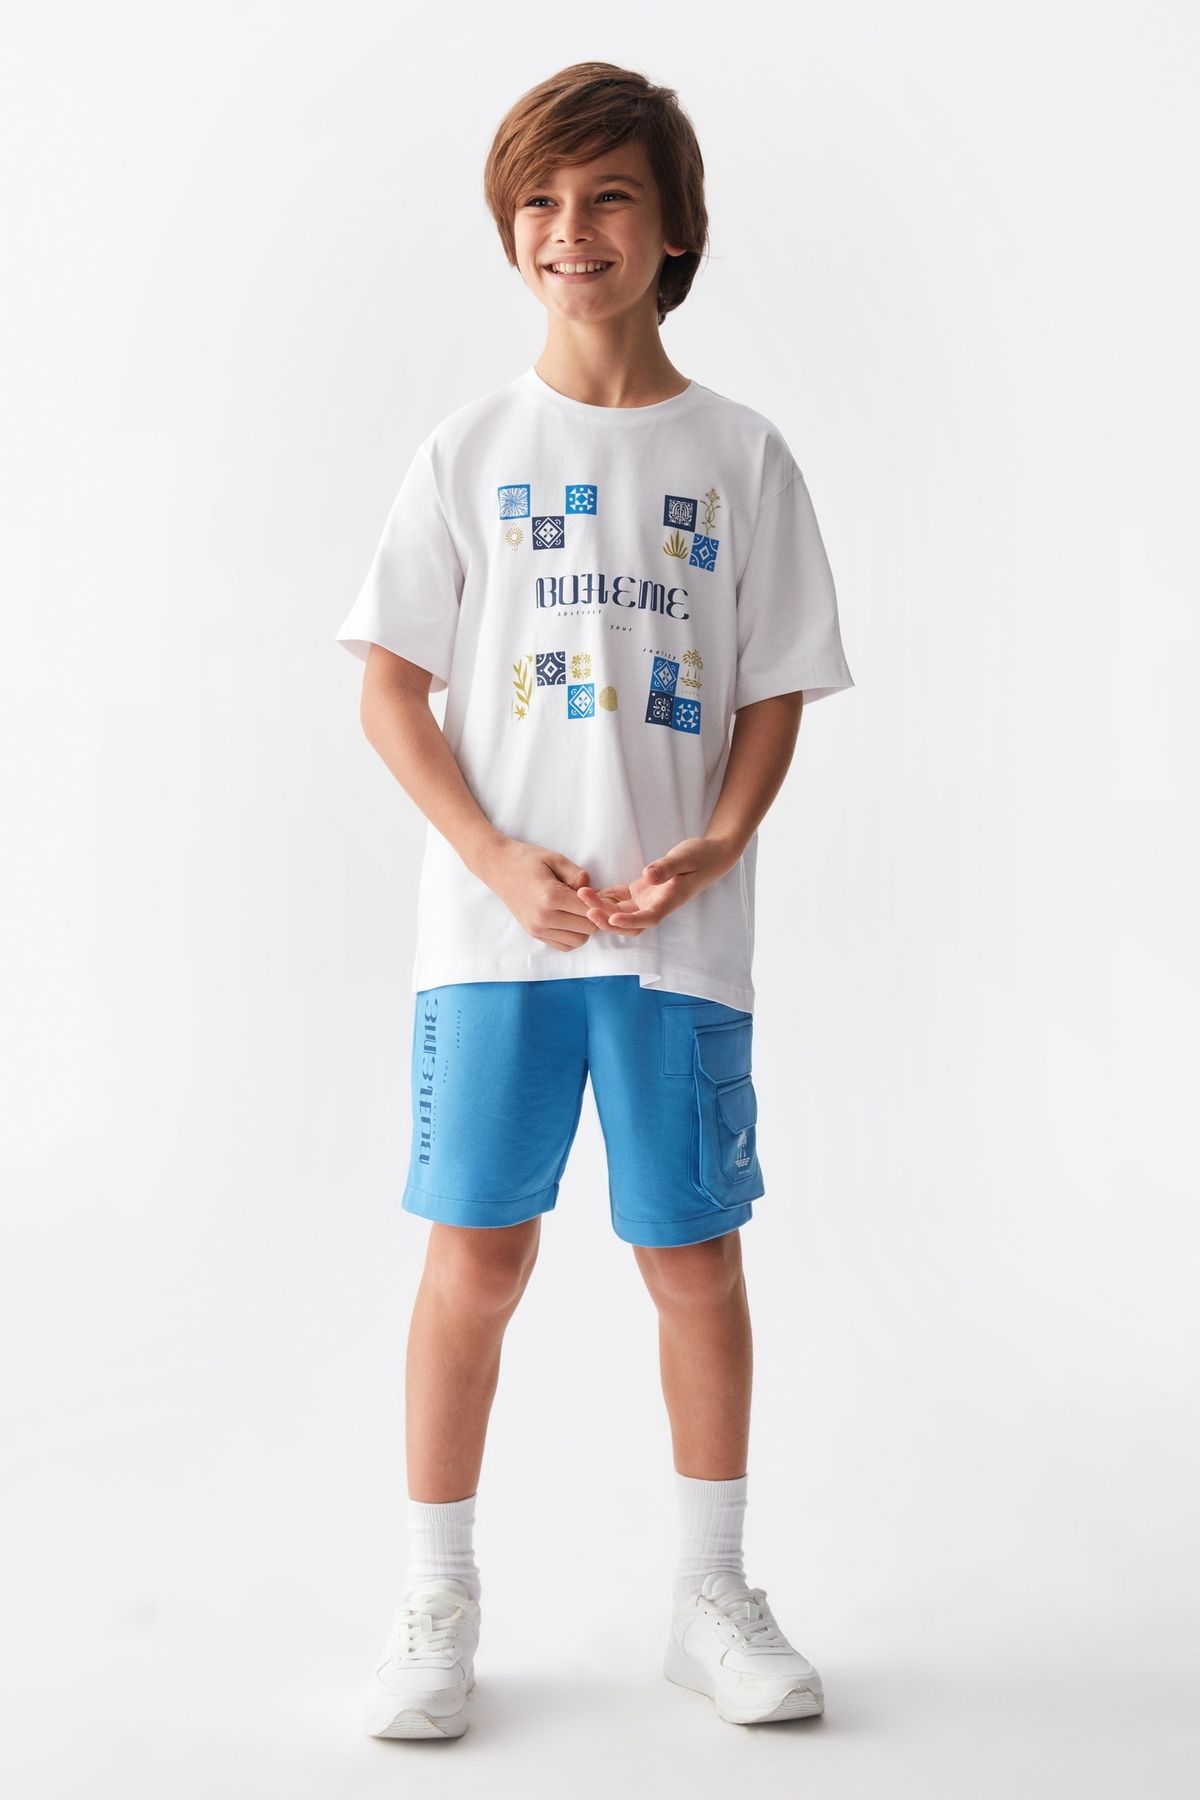 Nk Kids Boheme Erkek Çocuk T-shirt Şort Takım